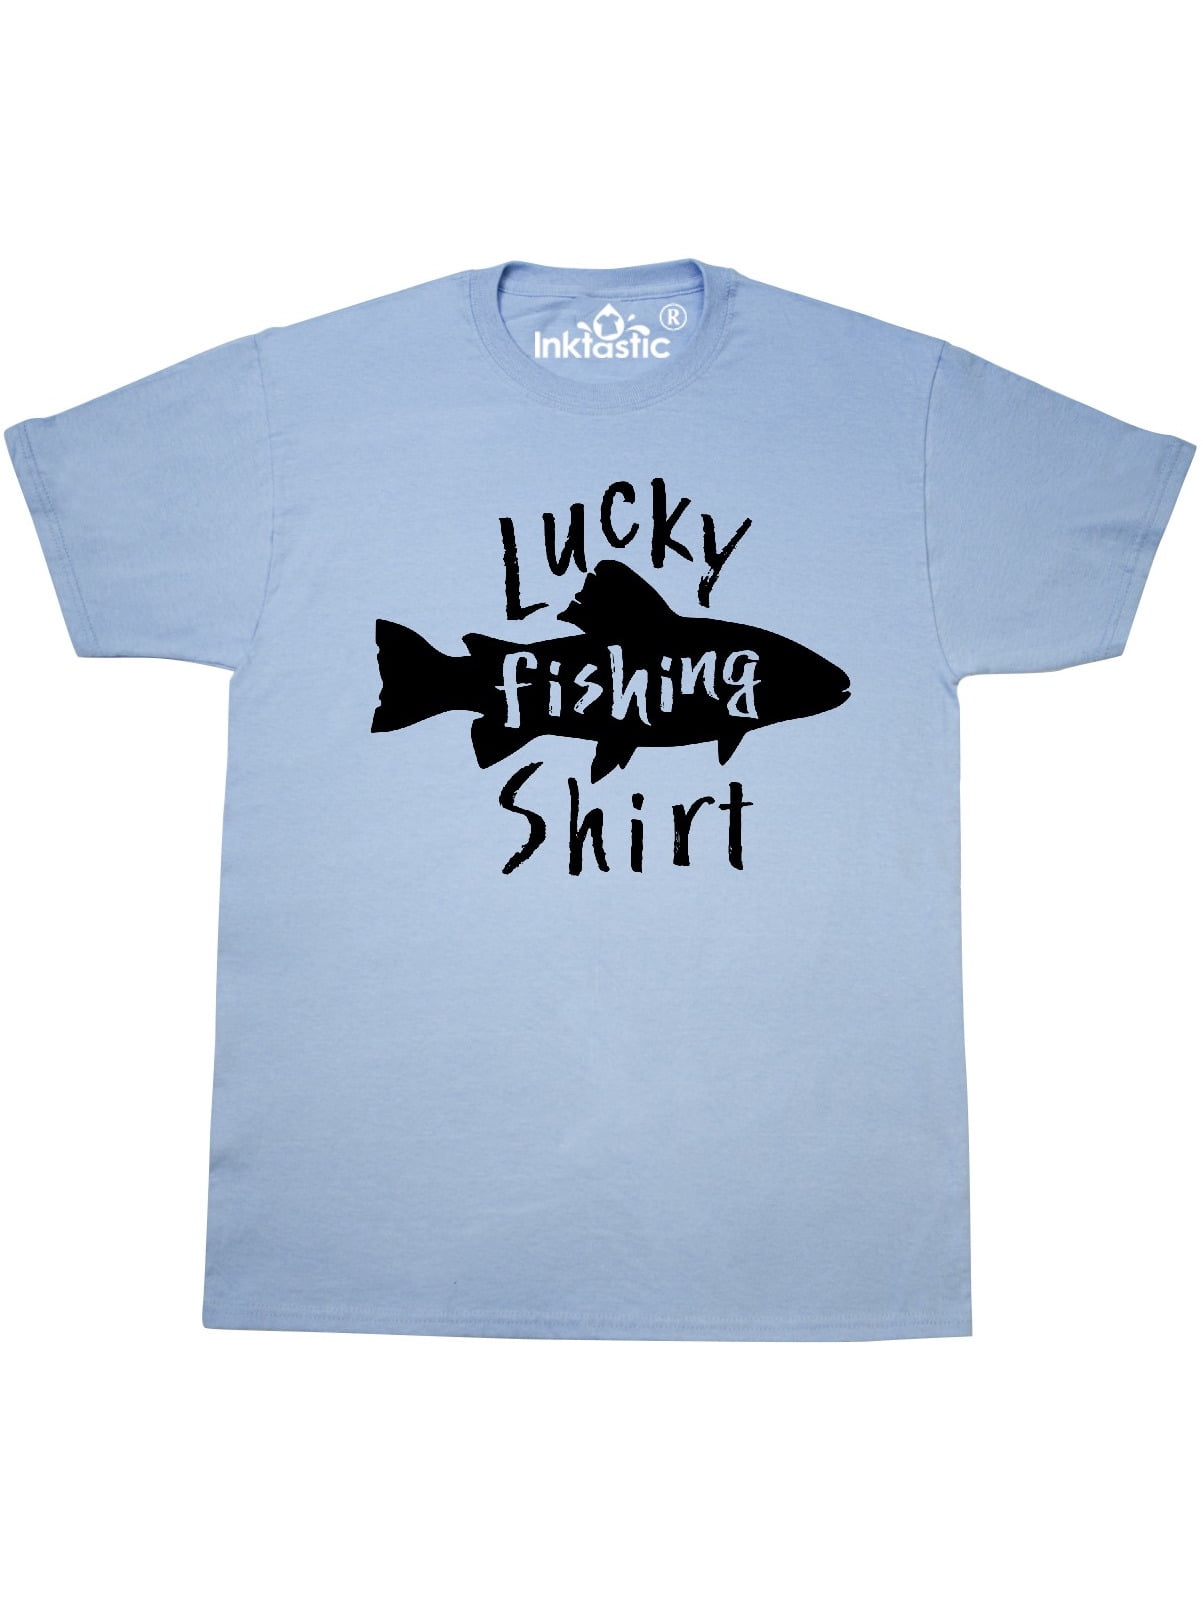 Download INKtastic - Lucky Fishing Shirt- fish T-Shirt - Walmart ...